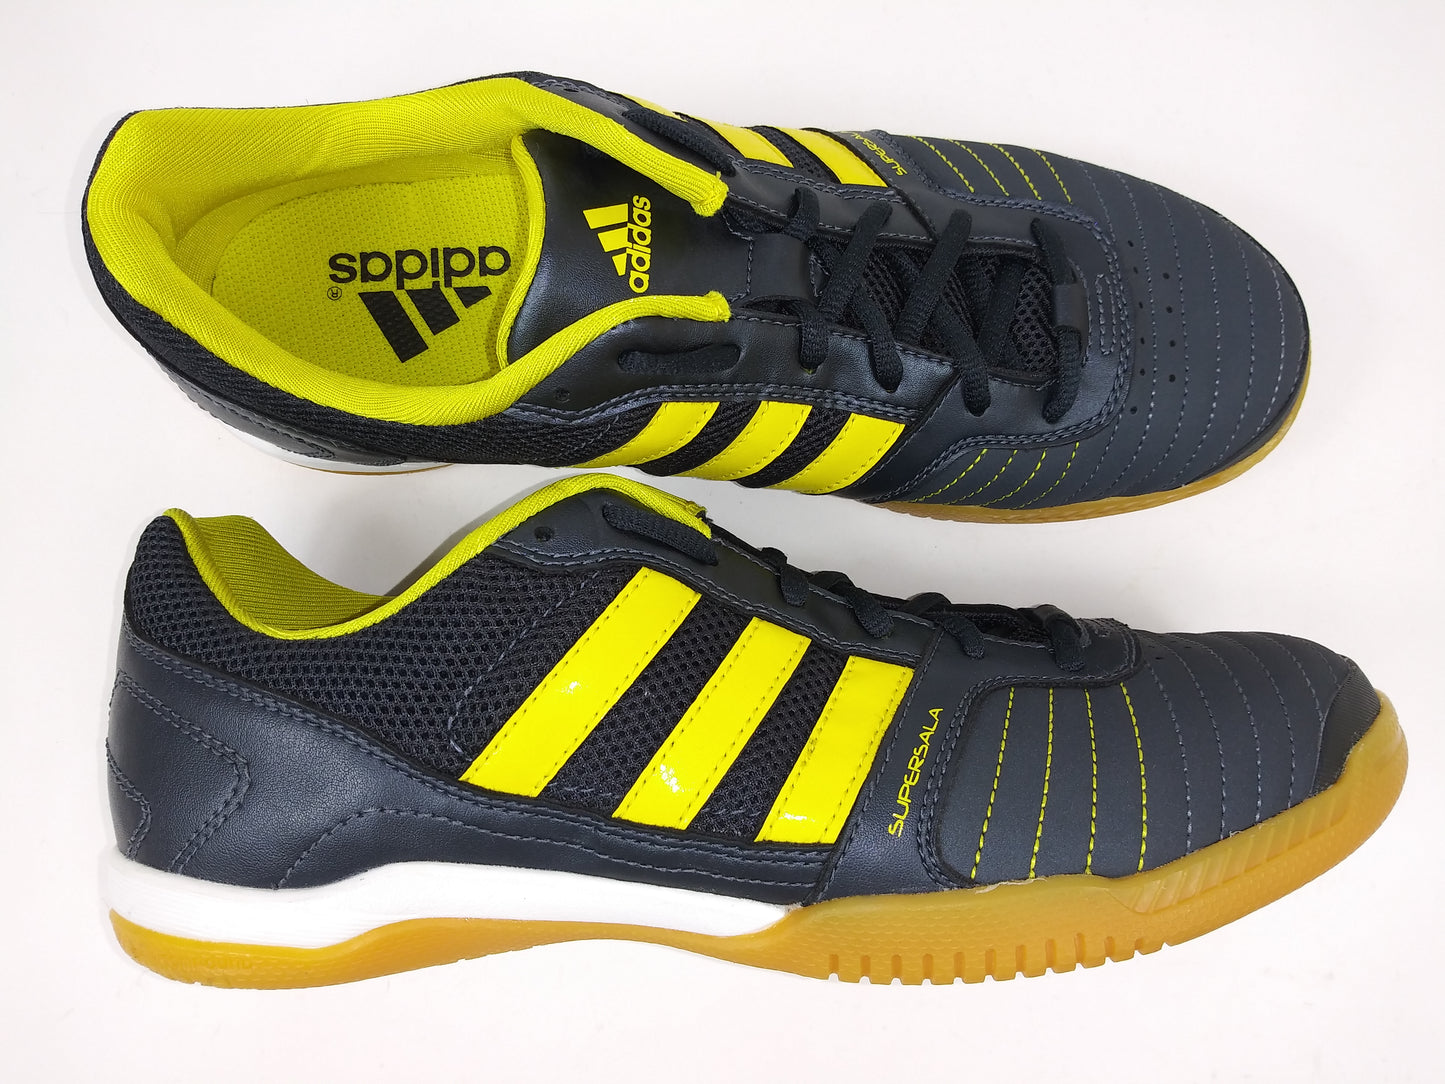 Adidas SuperSala IX Indoor Shoes Black Yellow